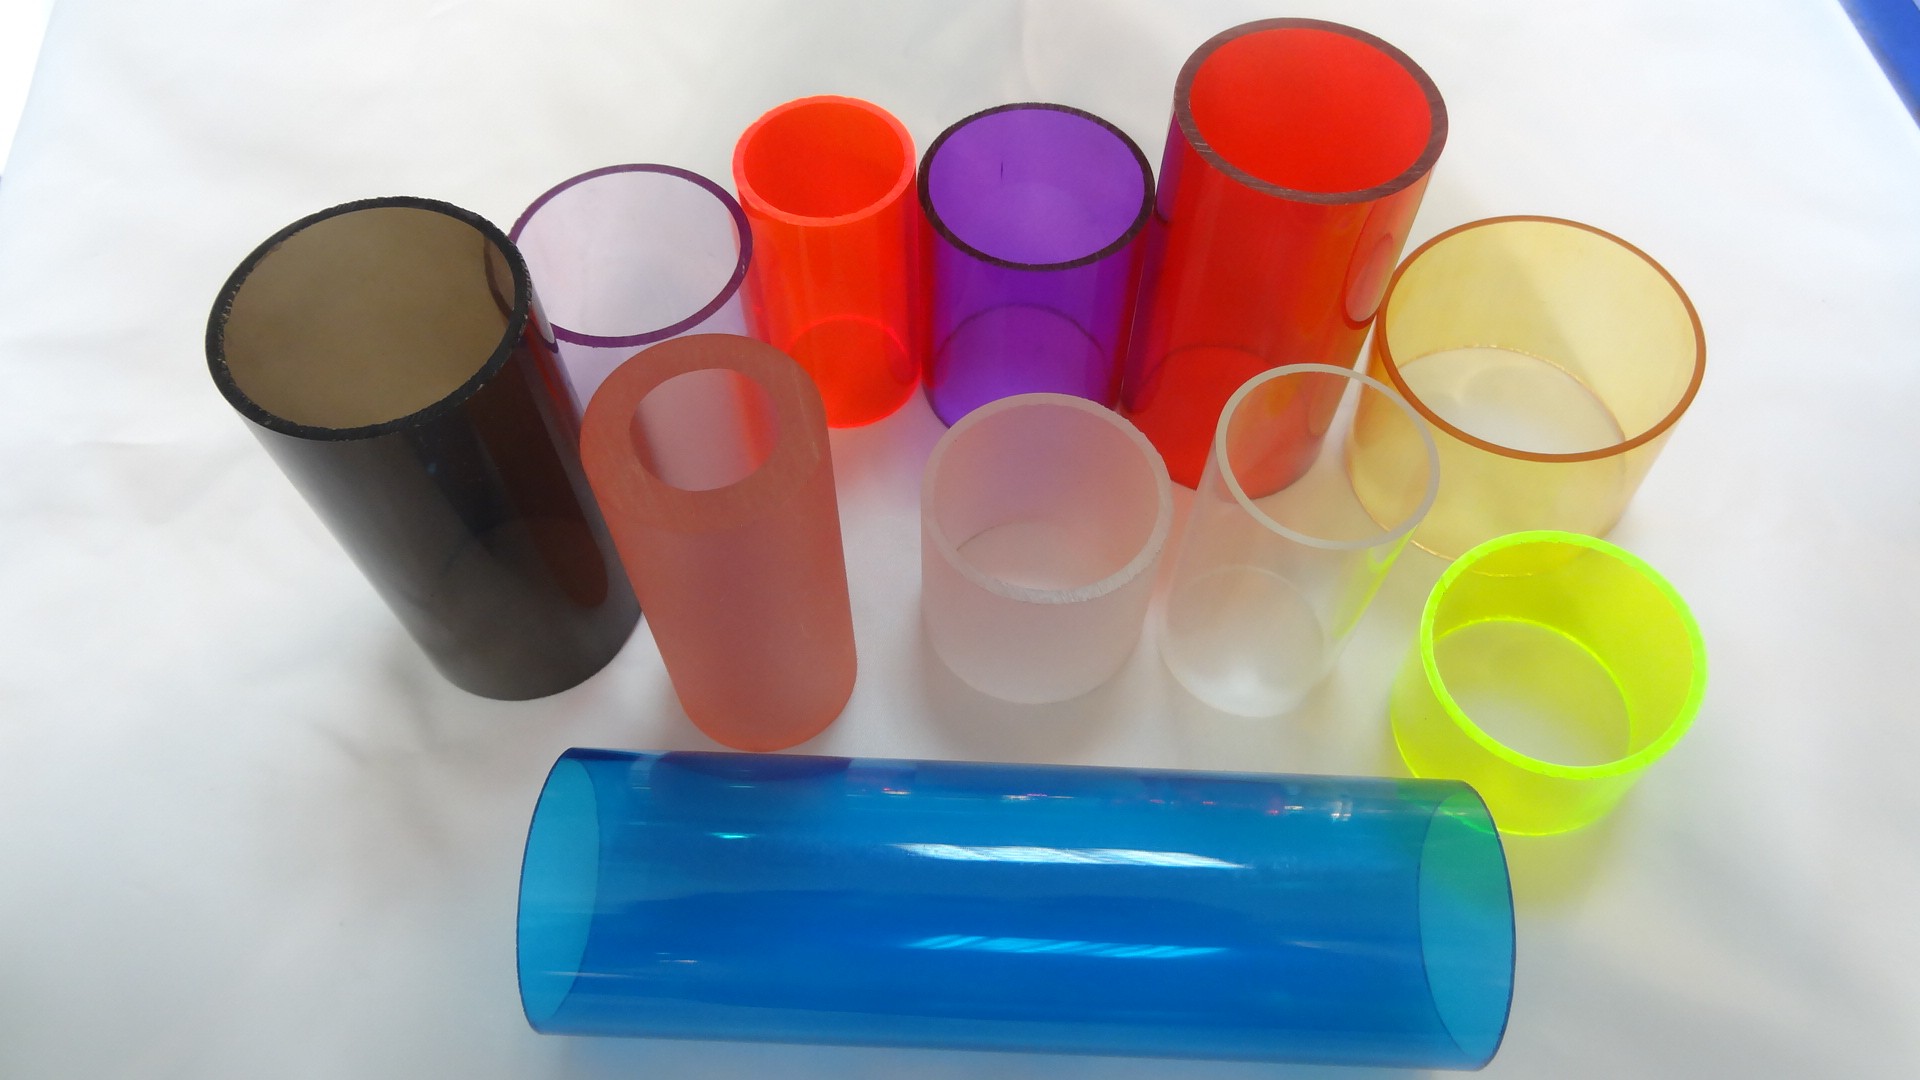 Mua acrylic acrylic ống, acrylic Plexiglass Ống, acrylic xi lanh PMMA Ống,acrylic acrylic ống, acrylic Plexiglass Ống, acrylic xi lanh PMMA Ống Giá ,acrylic acrylic ống, acrylic Plexiglass Ống, acrylic xi lanh PMMA Ống Brands,acrylic acrylic ống, acrylic Plexiglass Ống, acrylic xi lanh PMMA Ống Nhà sản xuất,acrylic acrylic ống, acrylic Plexiglass Ống, acrylic xi lanh PMMA Ống Quotes,acrylic acrylic ống, acrylic Plexiglass Ống, acrylic xi lanh PMMA Ống Công ty